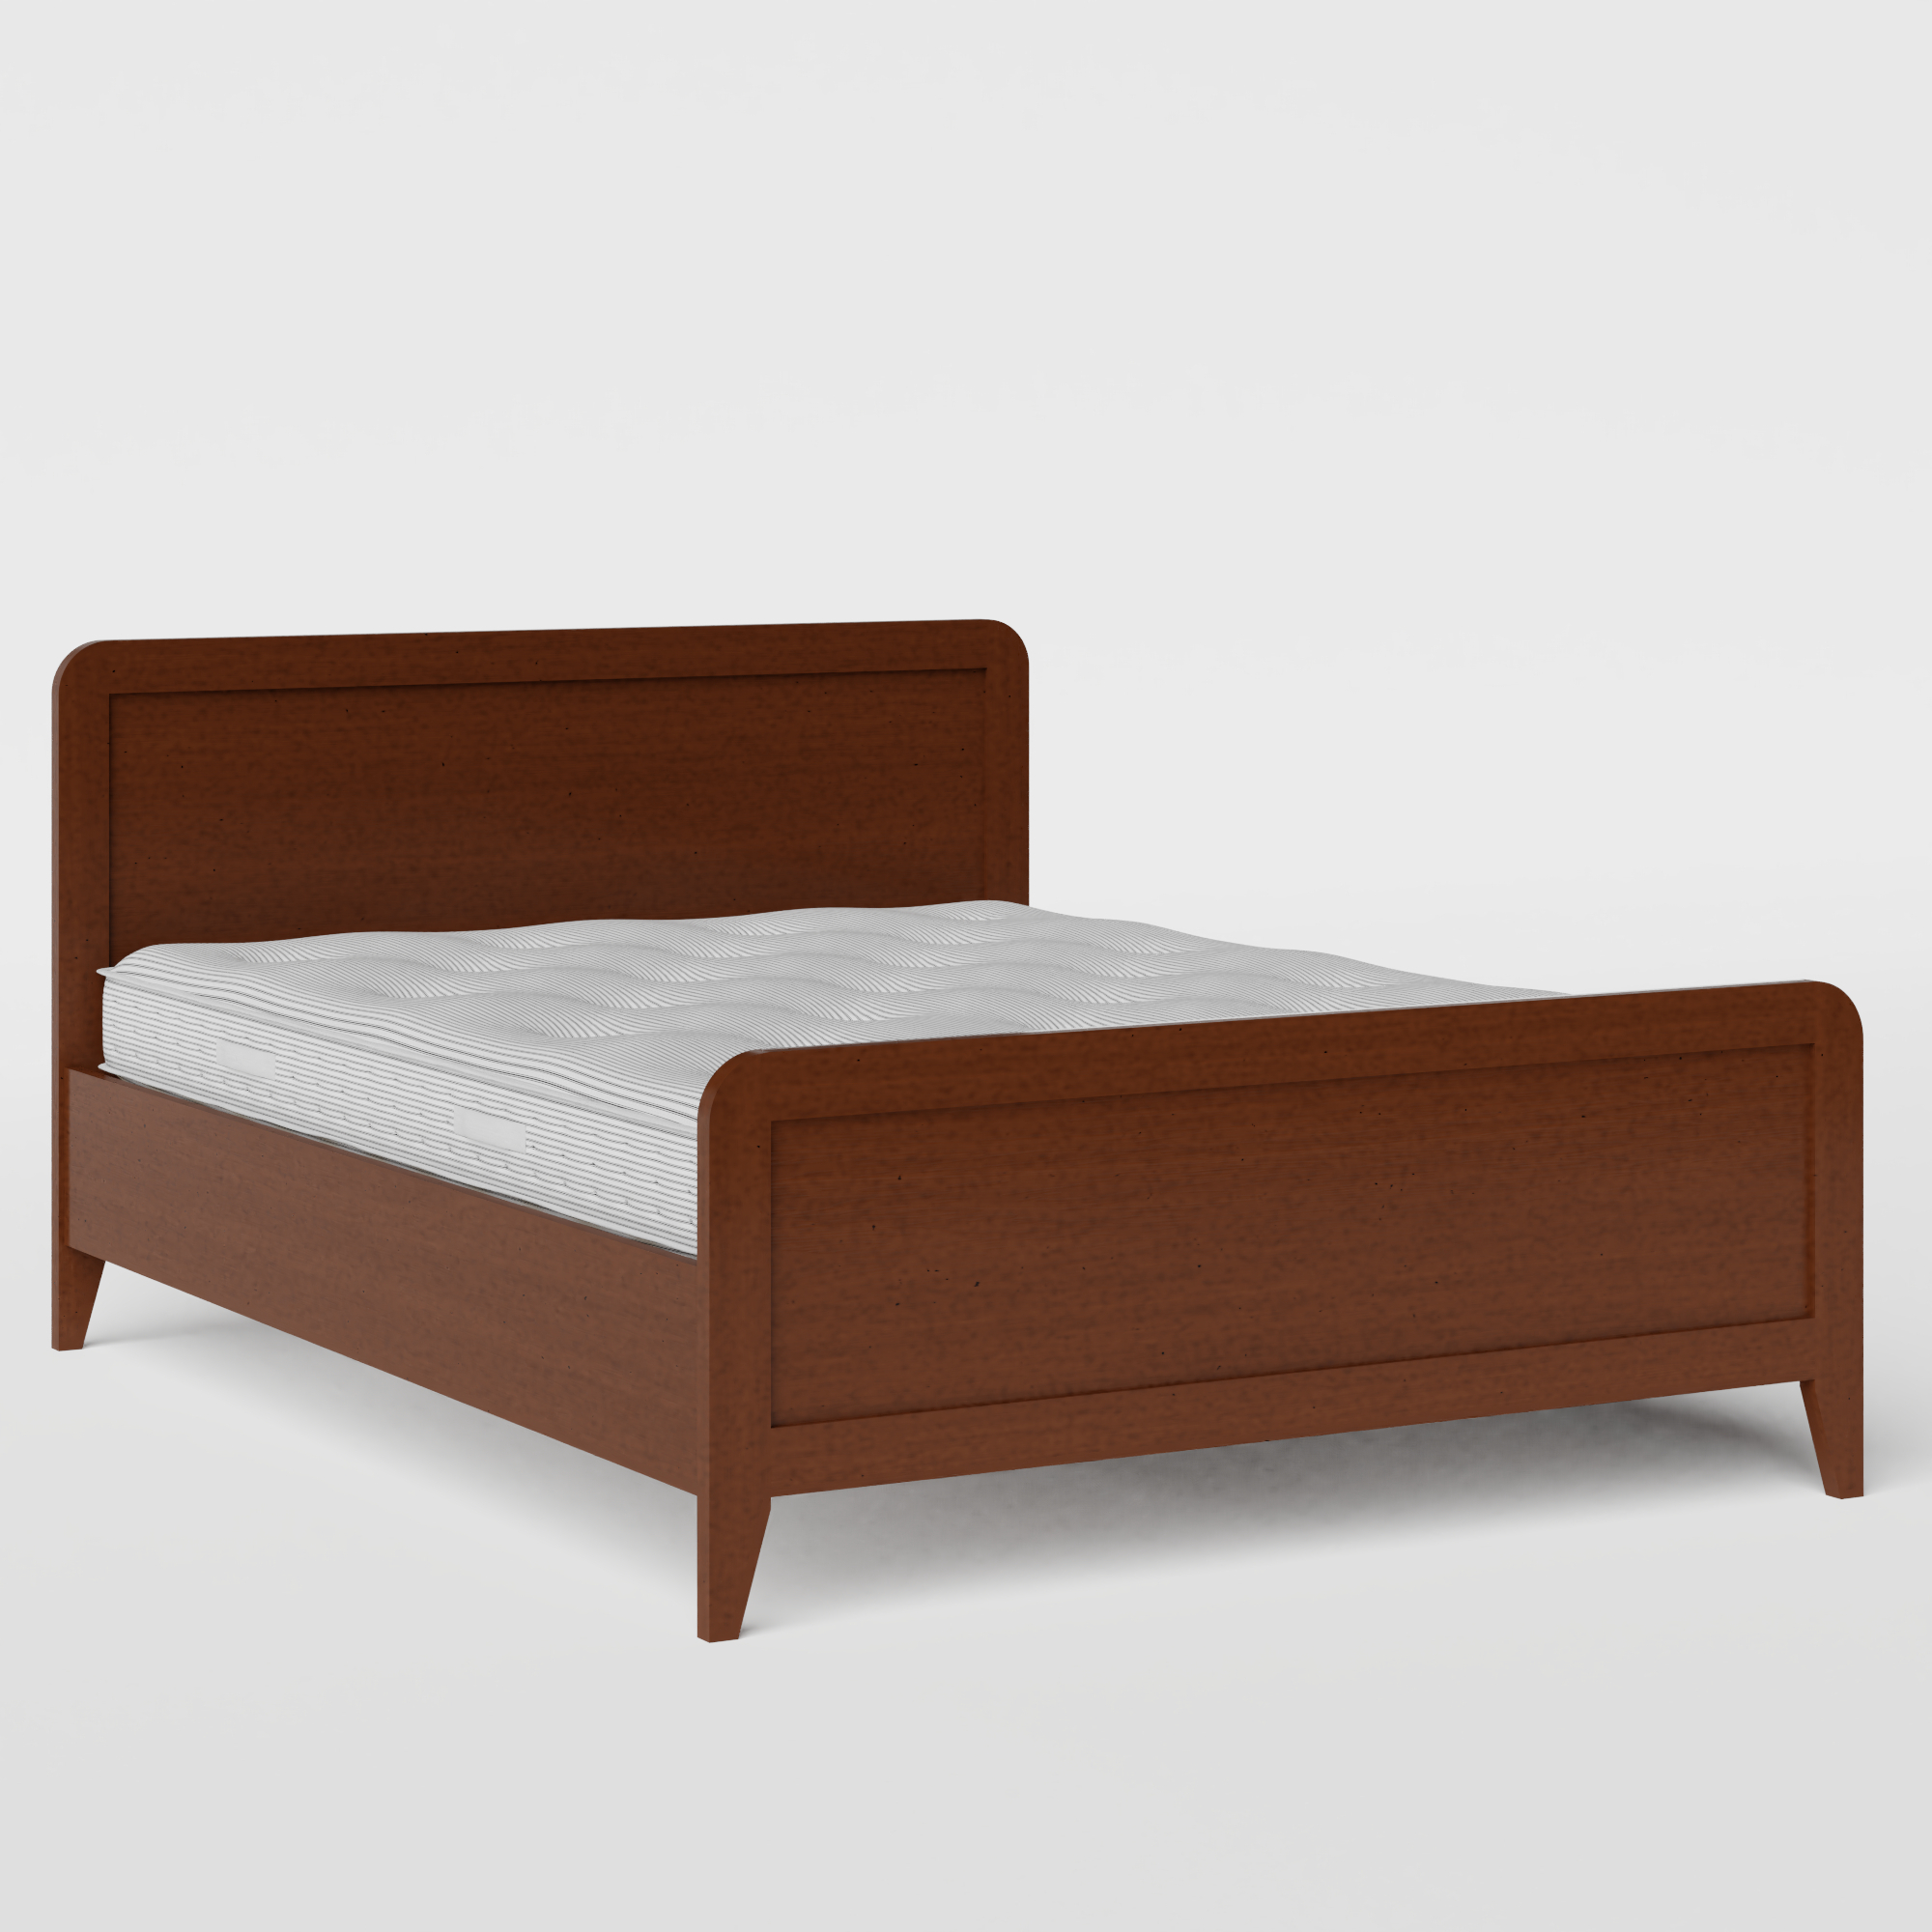 Keats wood bed in dark cherry with Juno mattress